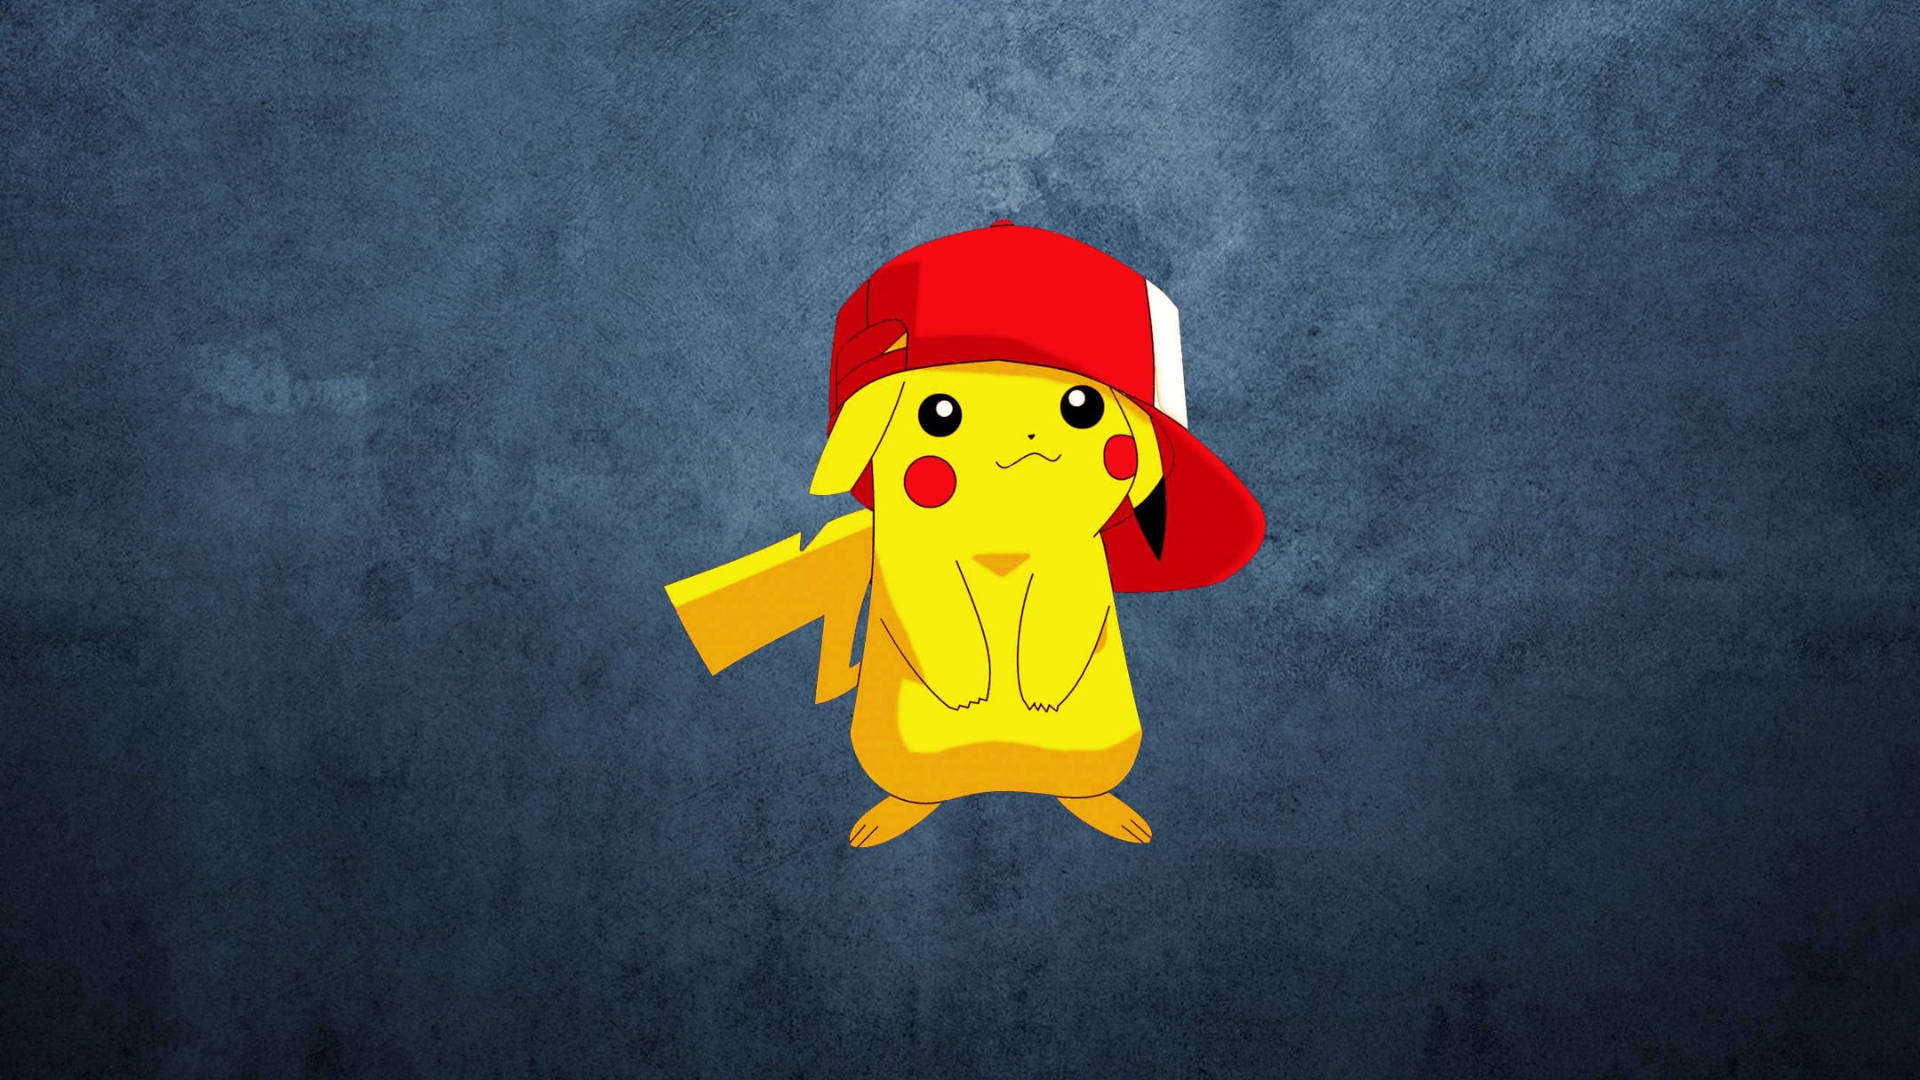 Cool And Cute Pikachu Pokemon Character Wallpaper